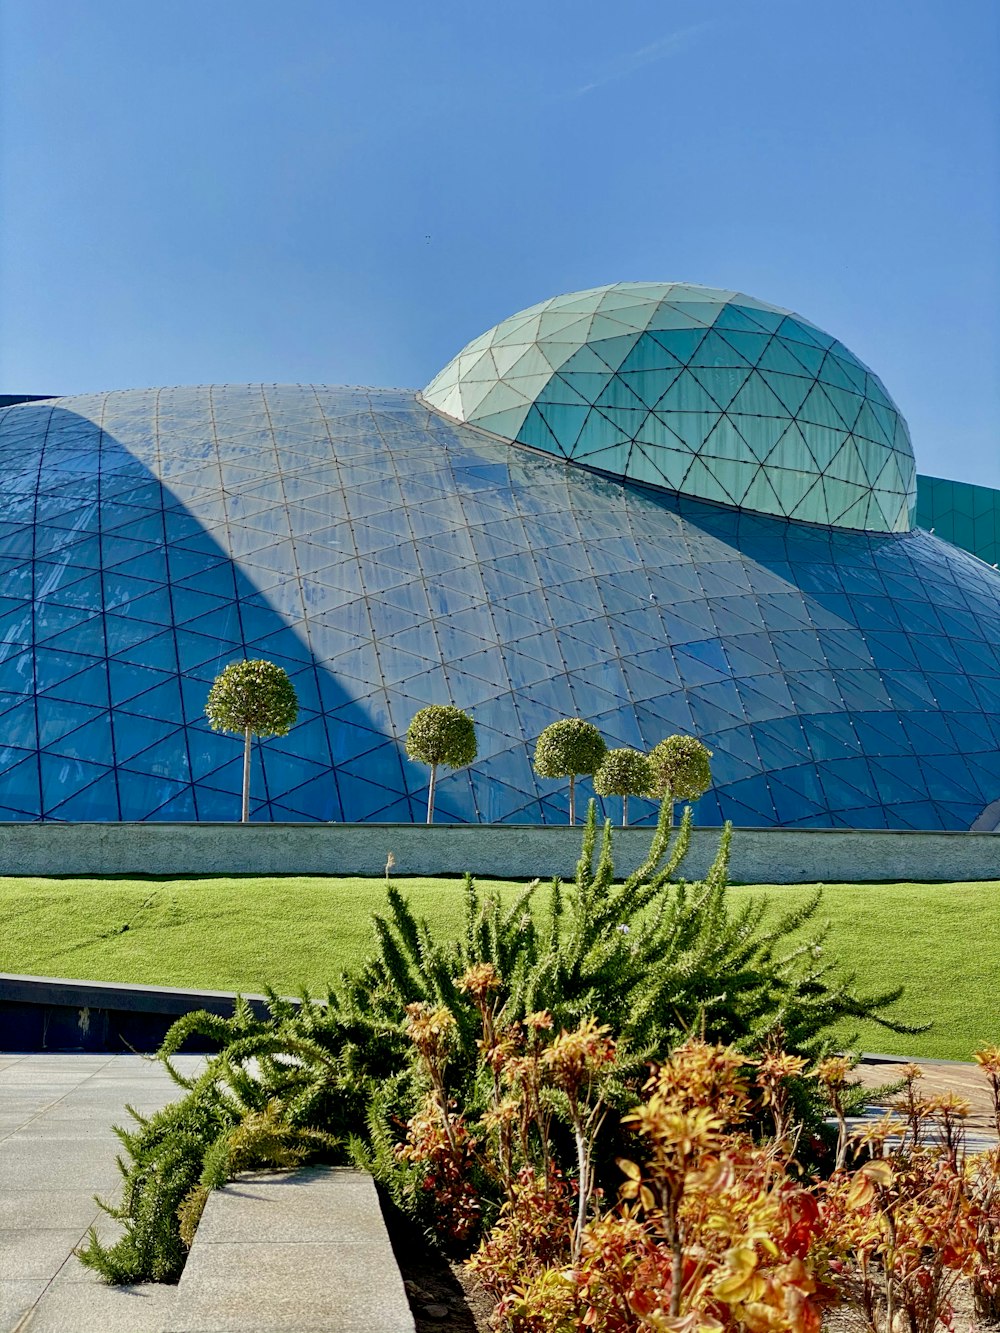 Edificio de cúpula de vidrio azul cerca de Green Grass Field durante el día